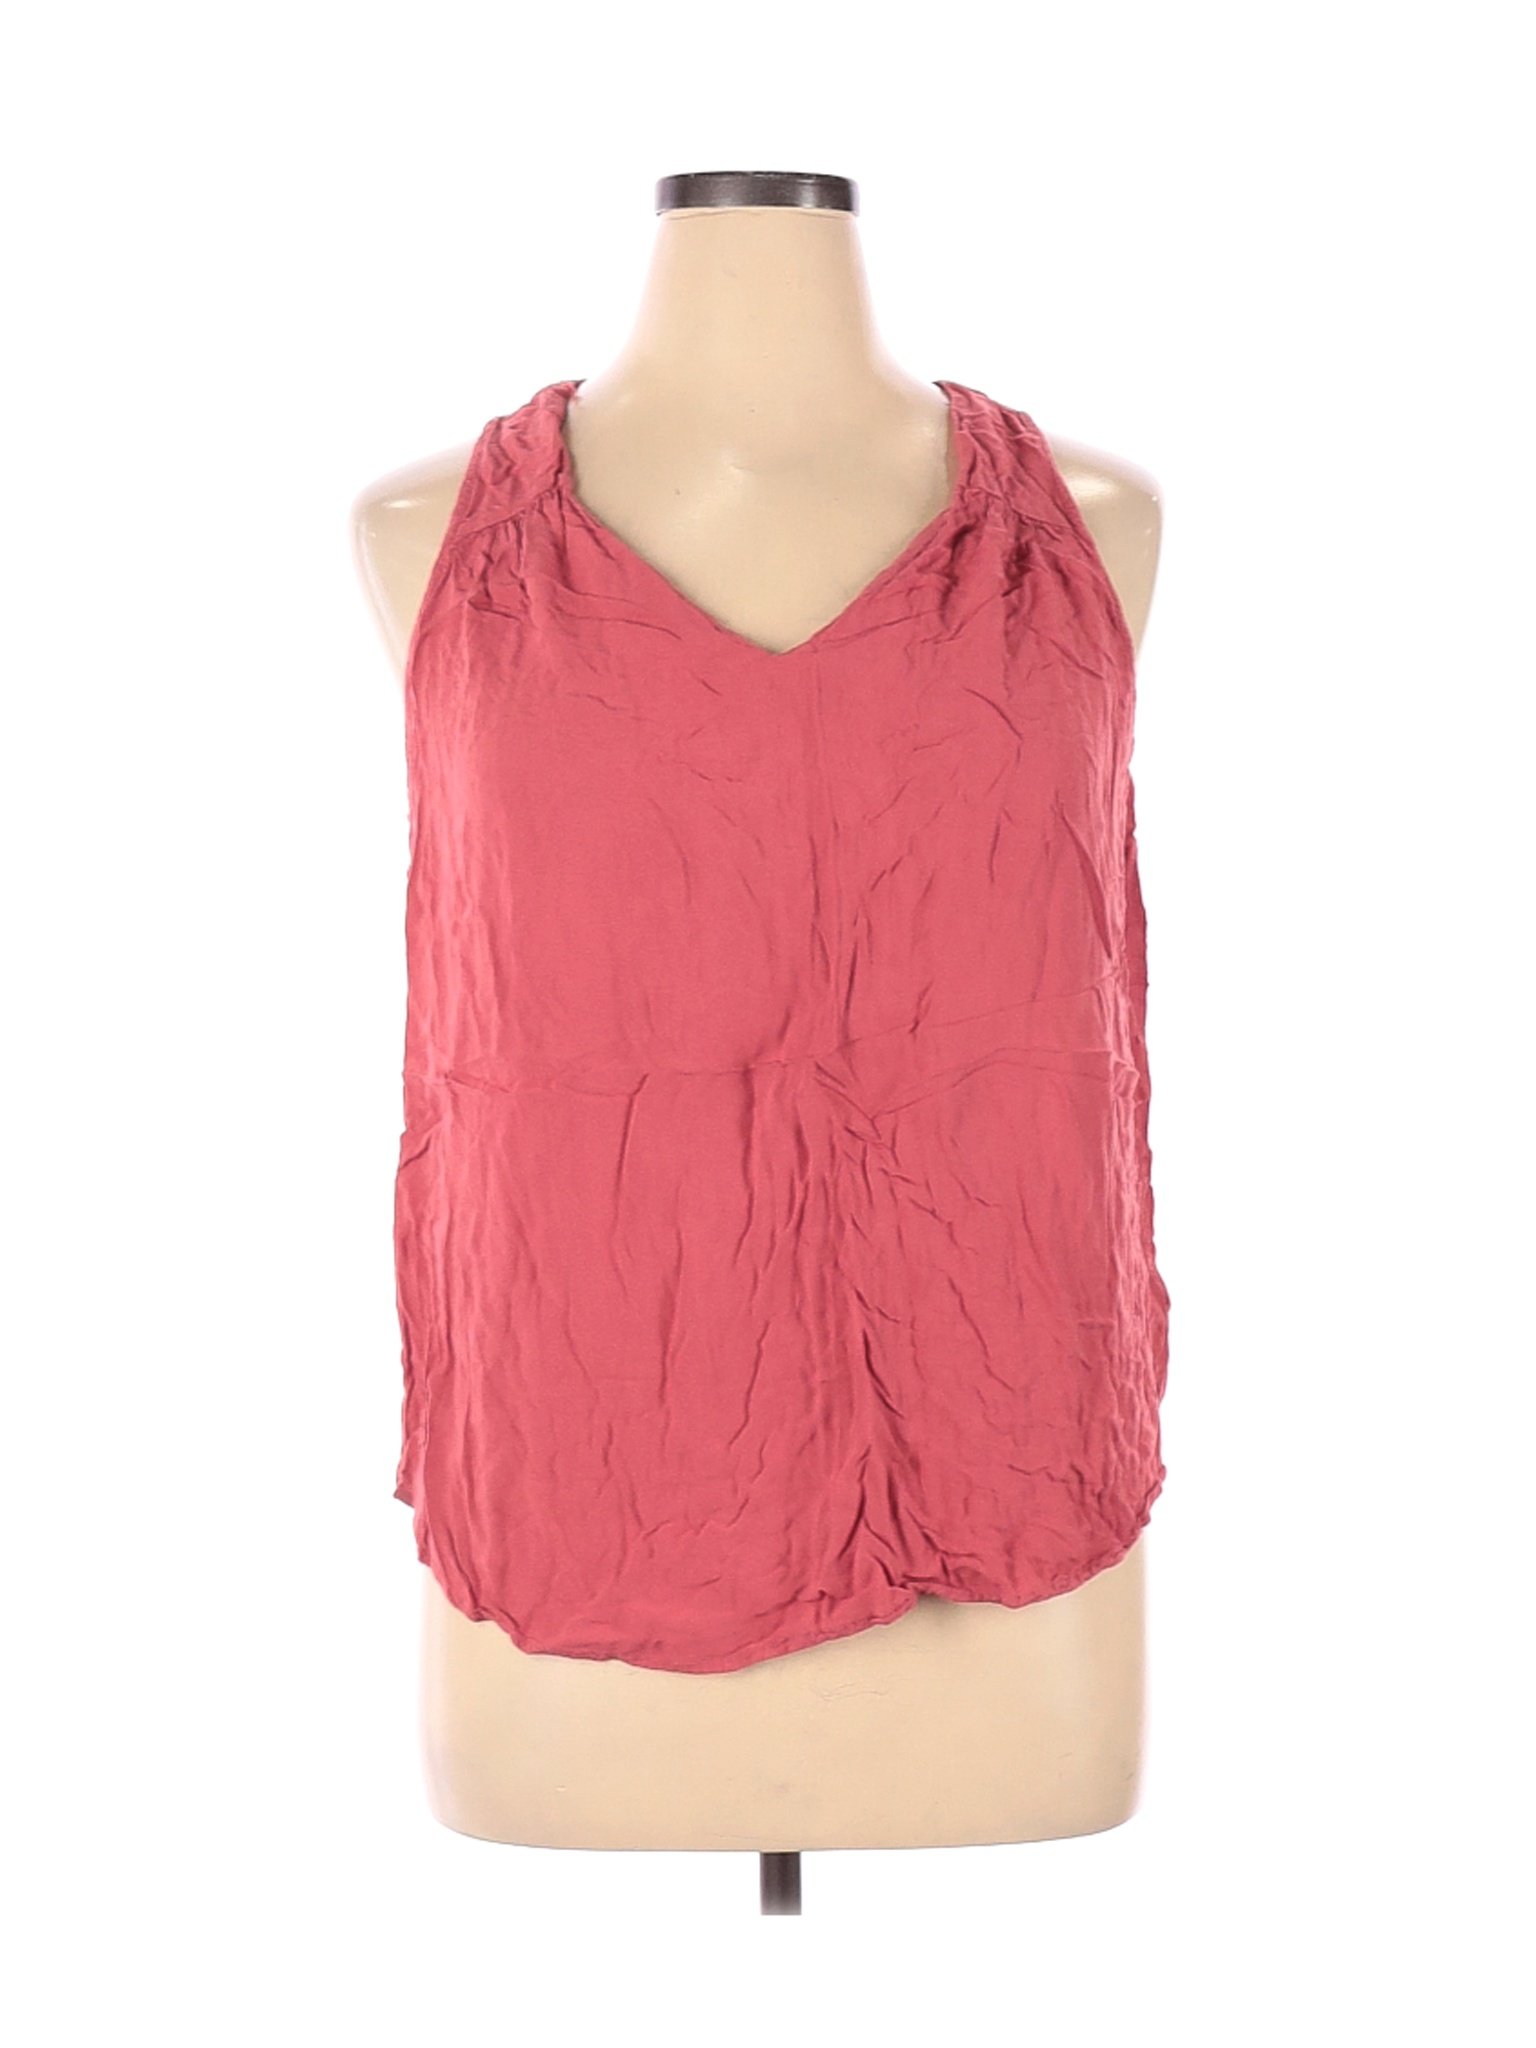 Old Navy Women Pink Sleeveless Blouse XL | eBay